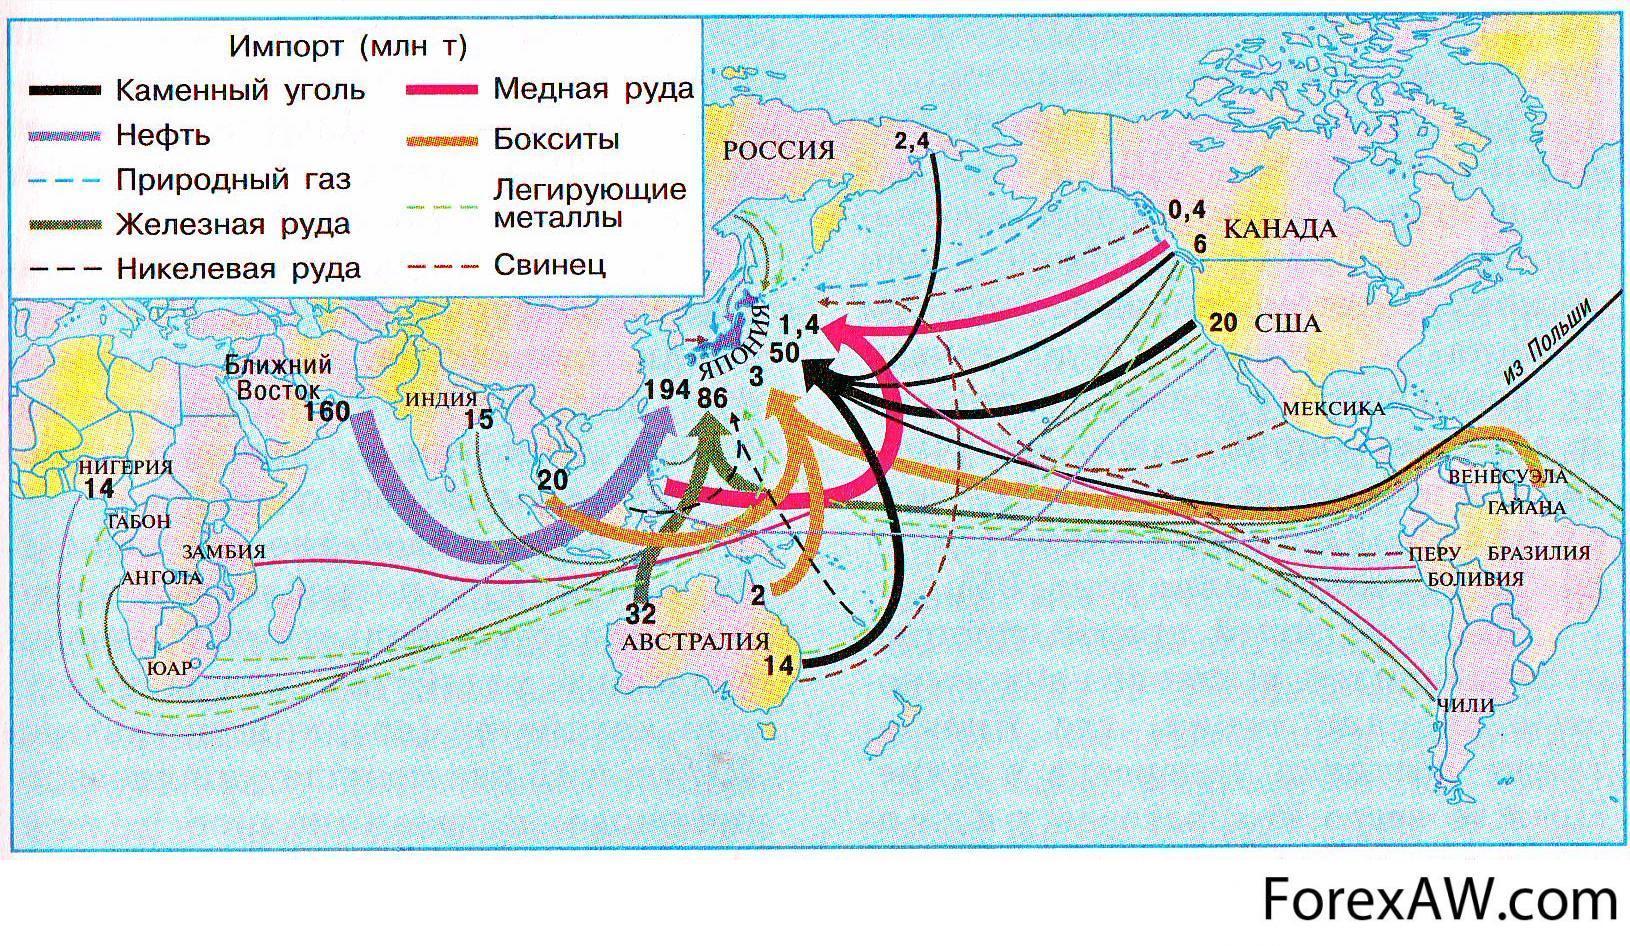 Экономические связи москвы. Импорт и экспорт Японии на карте стрелками. Импорт и экспорт Японии на карте. Импорт Японии на карте. Экспорт и импорт Японии на контурной карте стрелками.